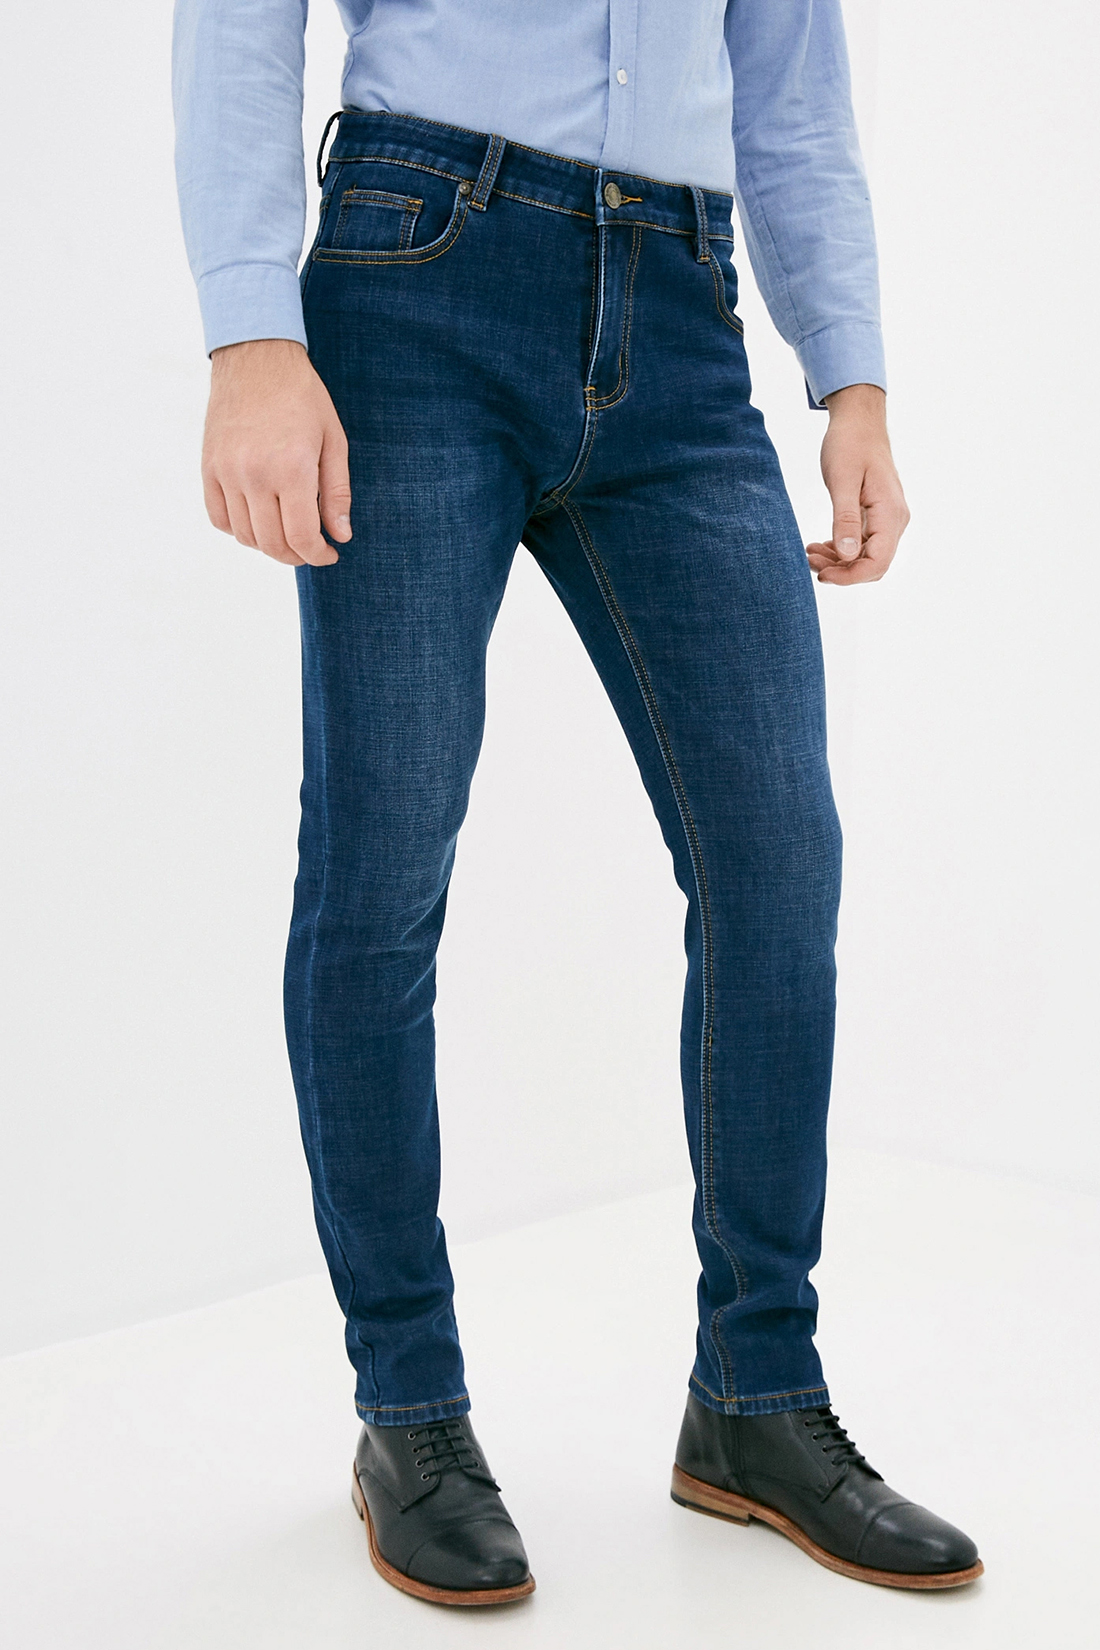 Утеплённые джинсы (арт. baon B800507), размер 30, цвет dark blue denim#синий